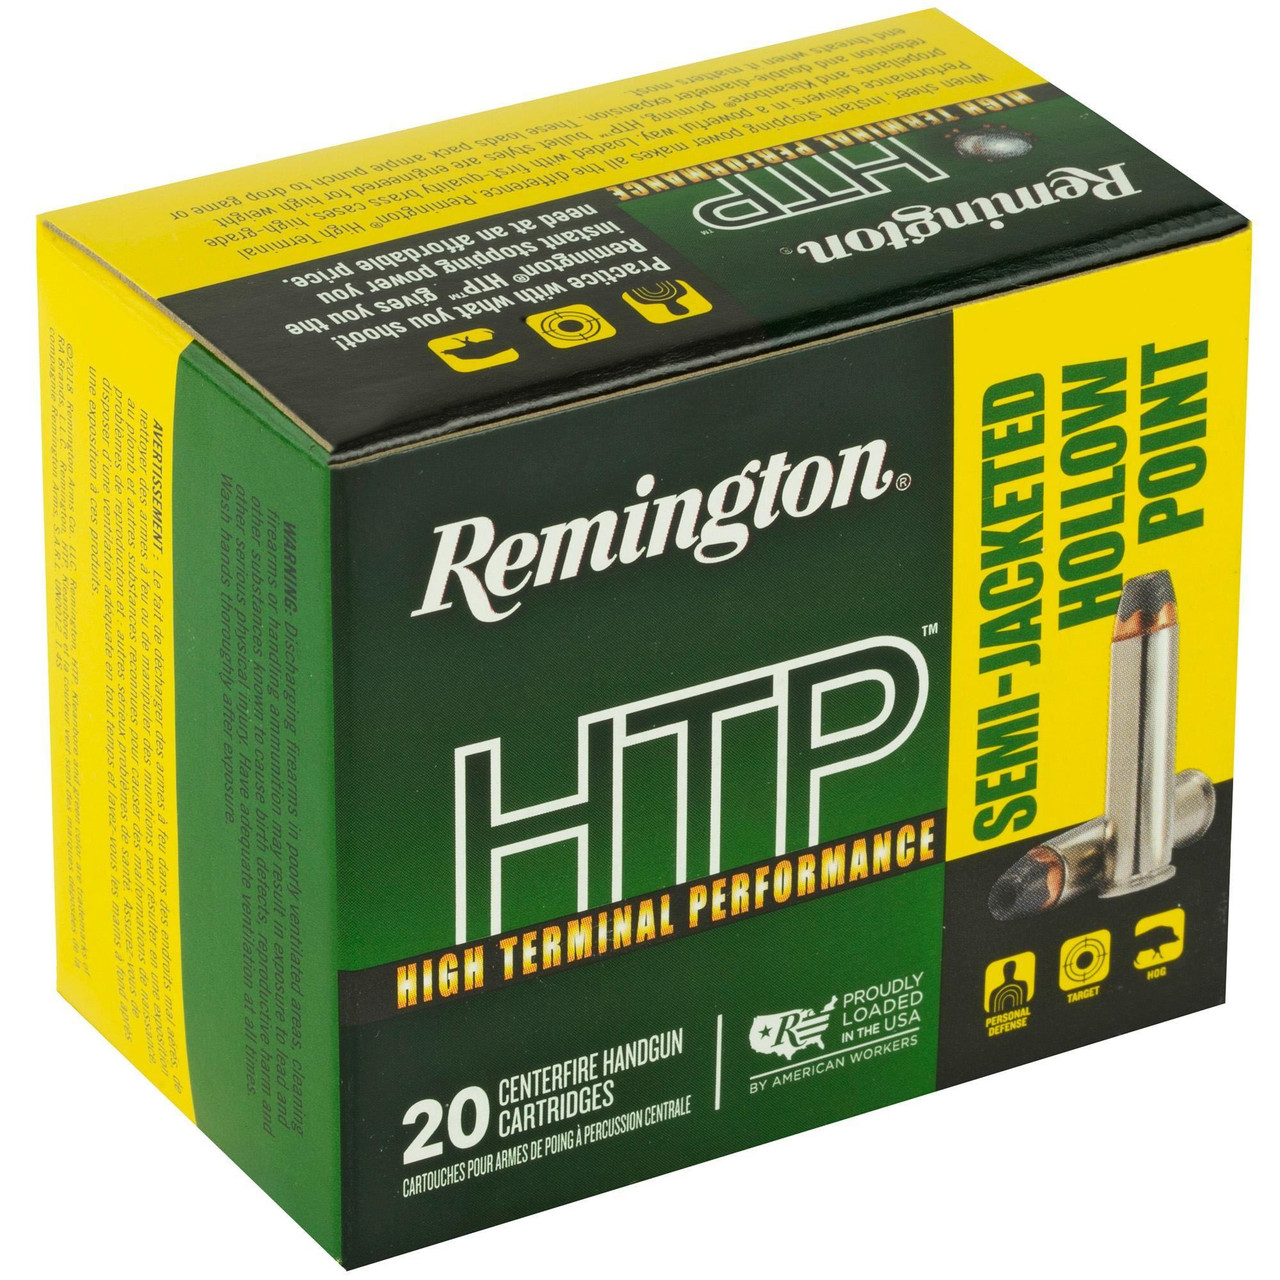 Remington HTP High Terminal Performance 38 Special +P SJHP